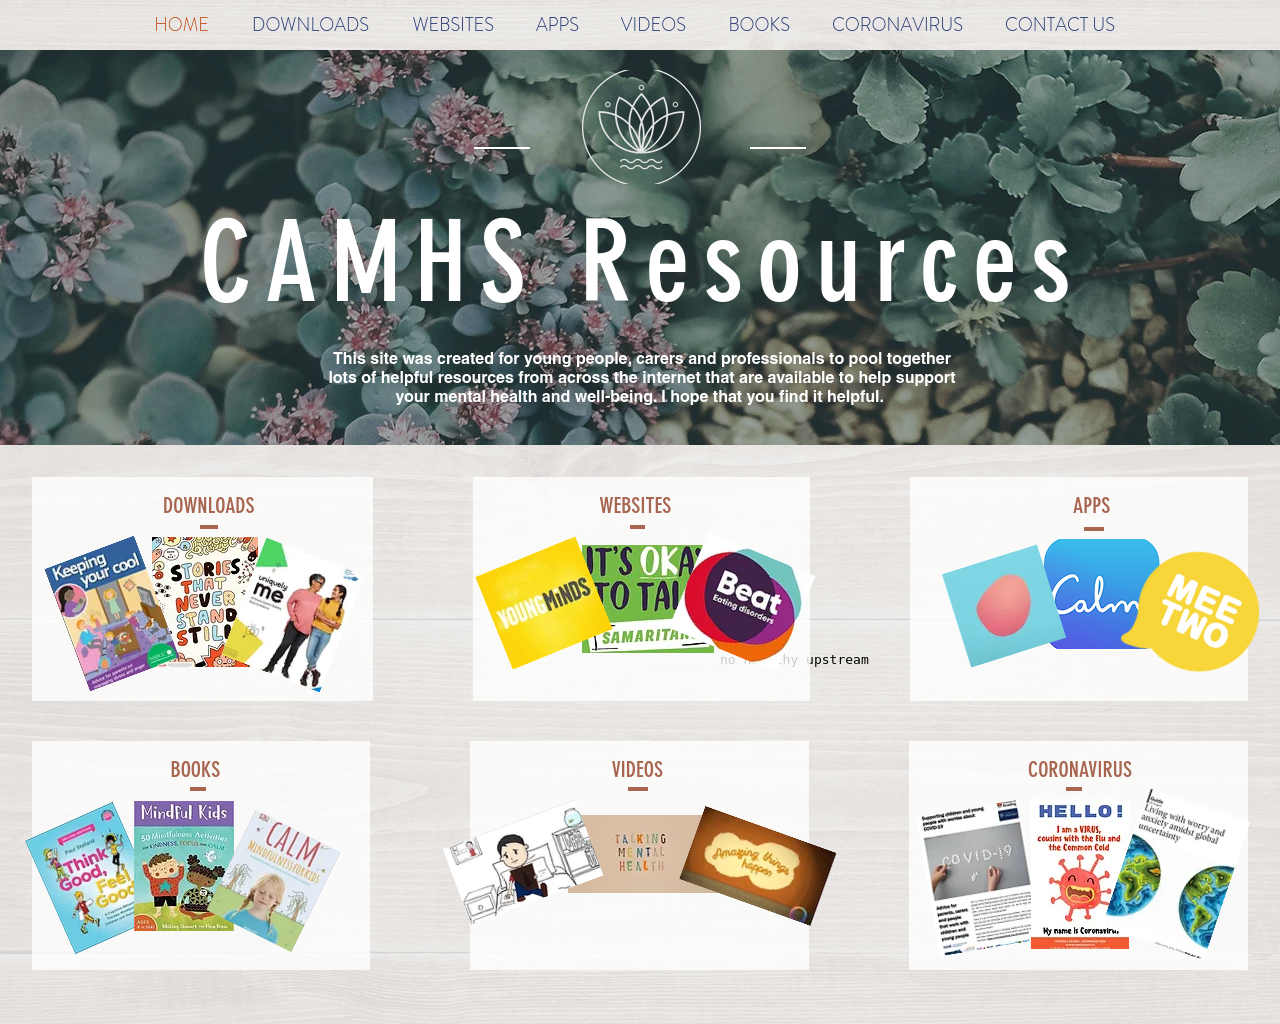 CAHMS Resources